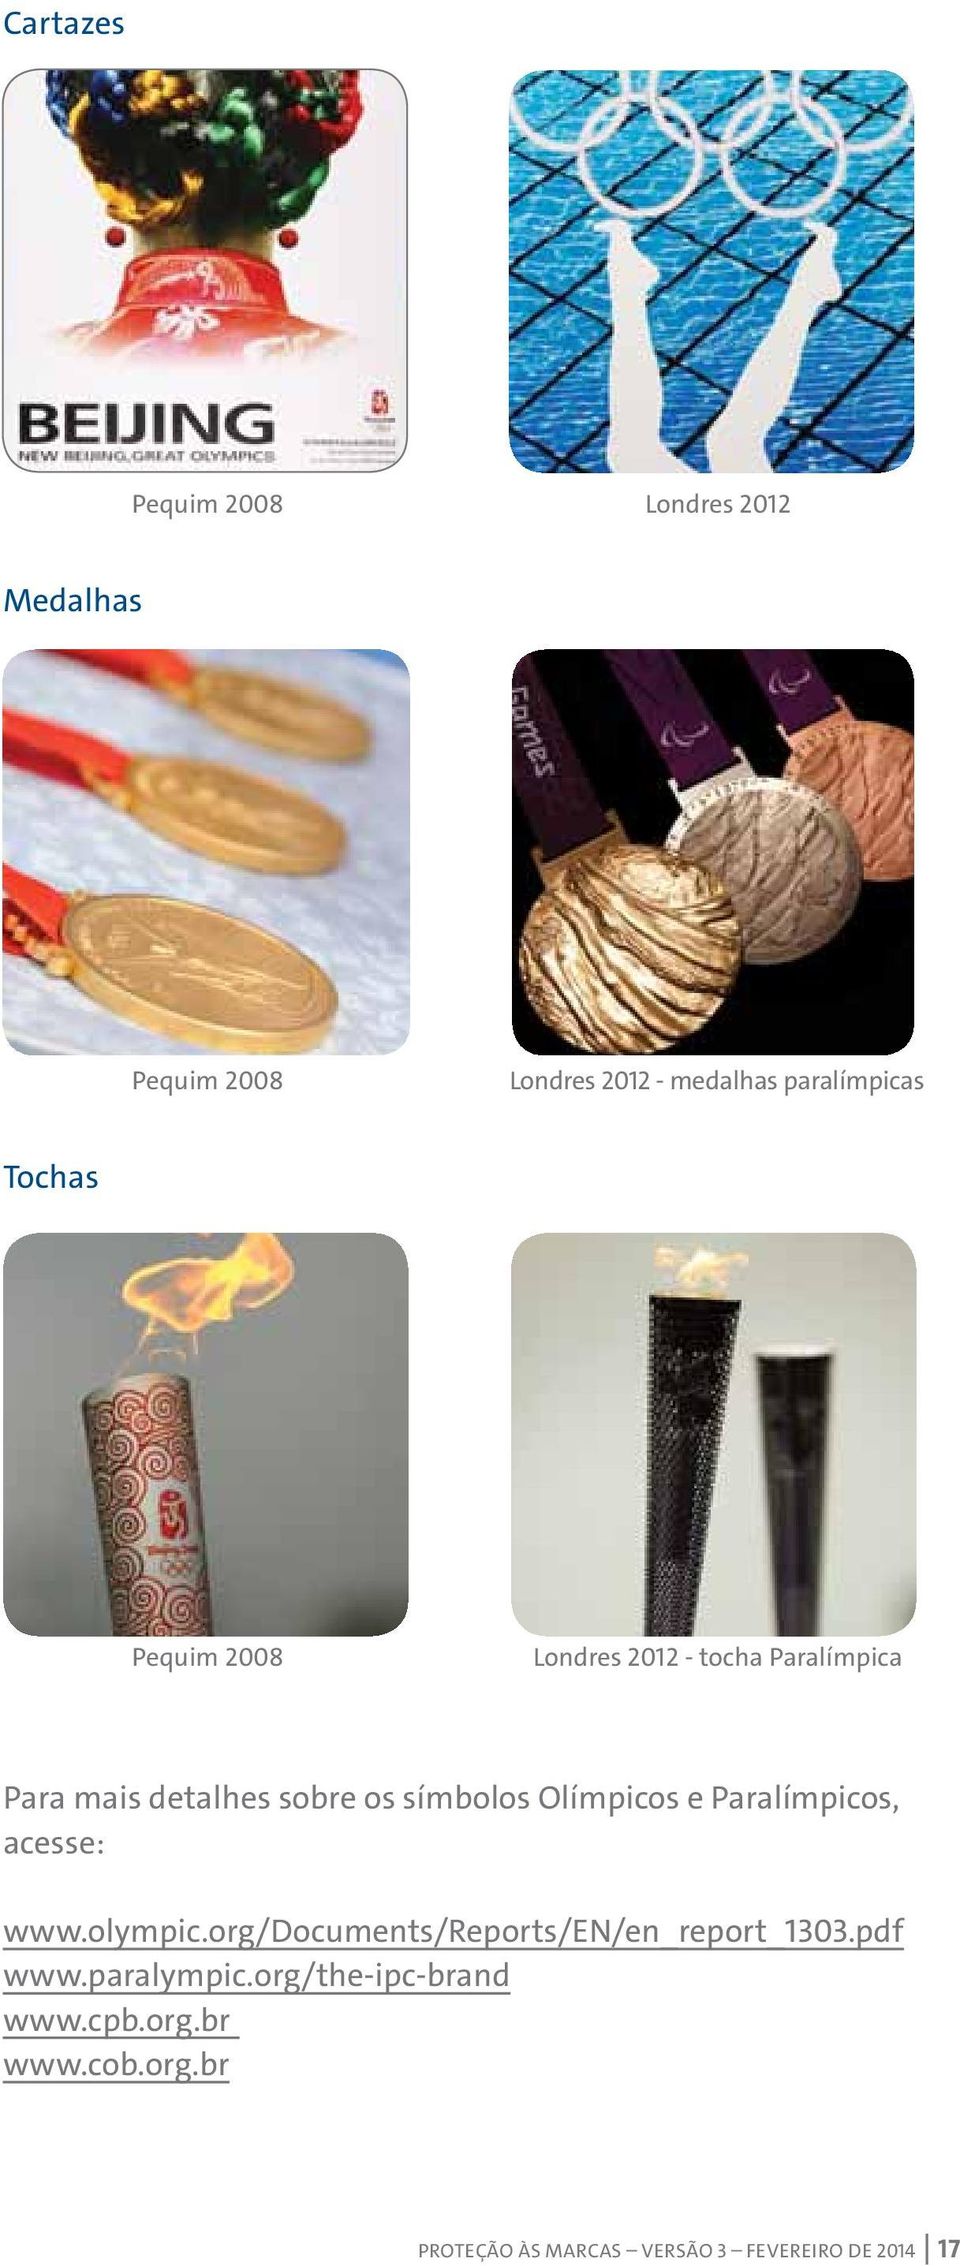 Olímpicos e Paralímpicos, acesse: www.olympic.org/documents/reports/en/en_report_1303.pdf www.